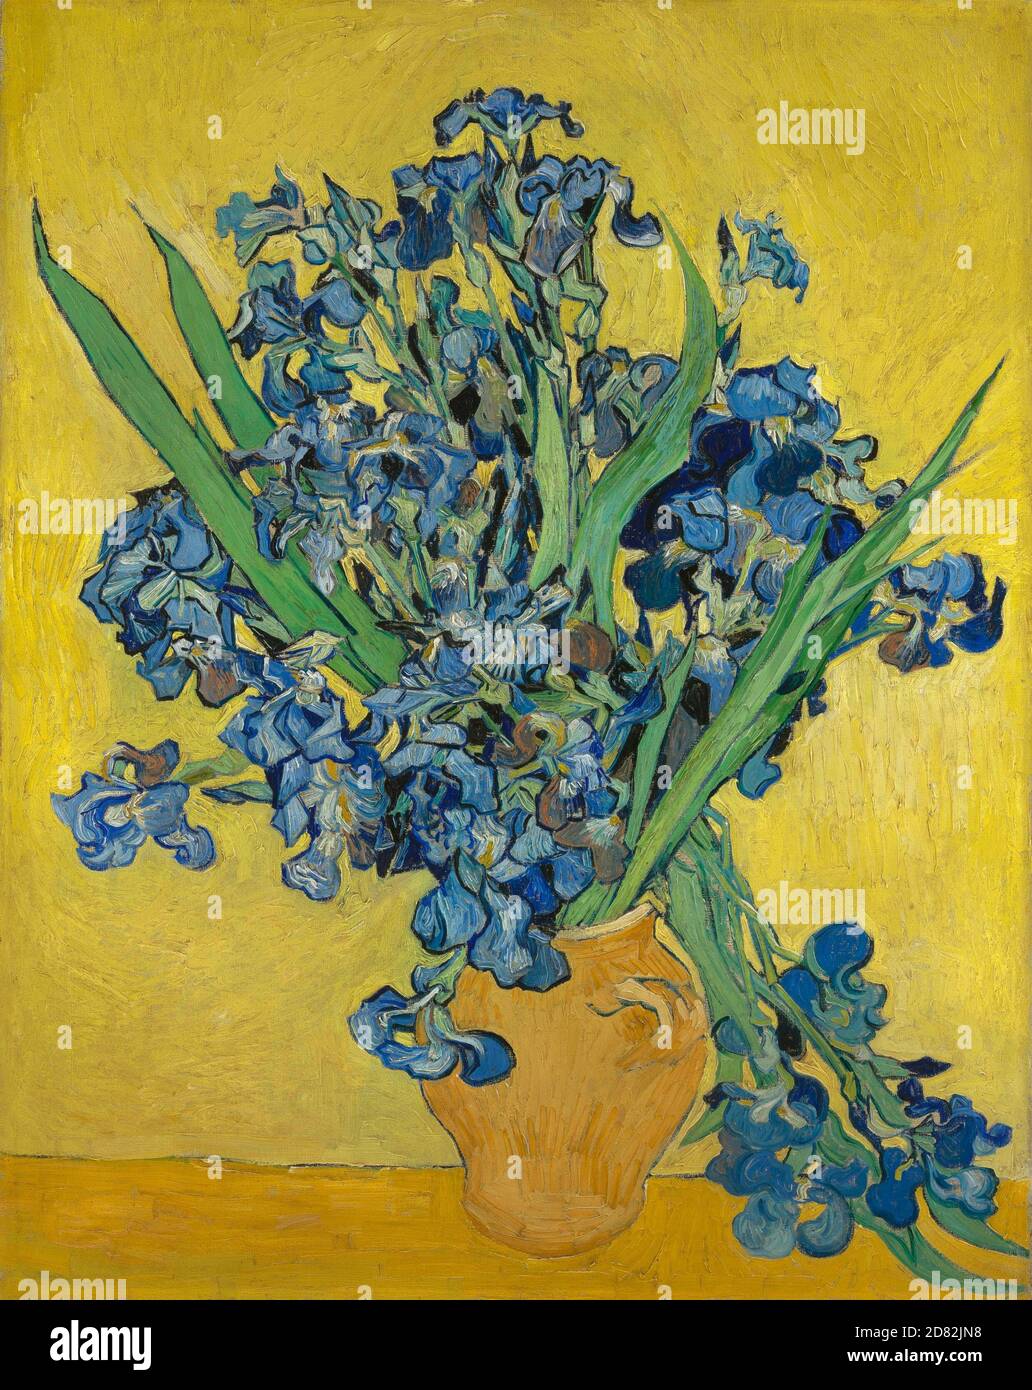 Titolo: Iris Creatore: Vincent van Gogh Data: 1890 Medio: Olio su tela dimensioni: 92.7 x 73.9 cm Ubicazione: Van Gogh Museum, Amsterdam Foto Stock